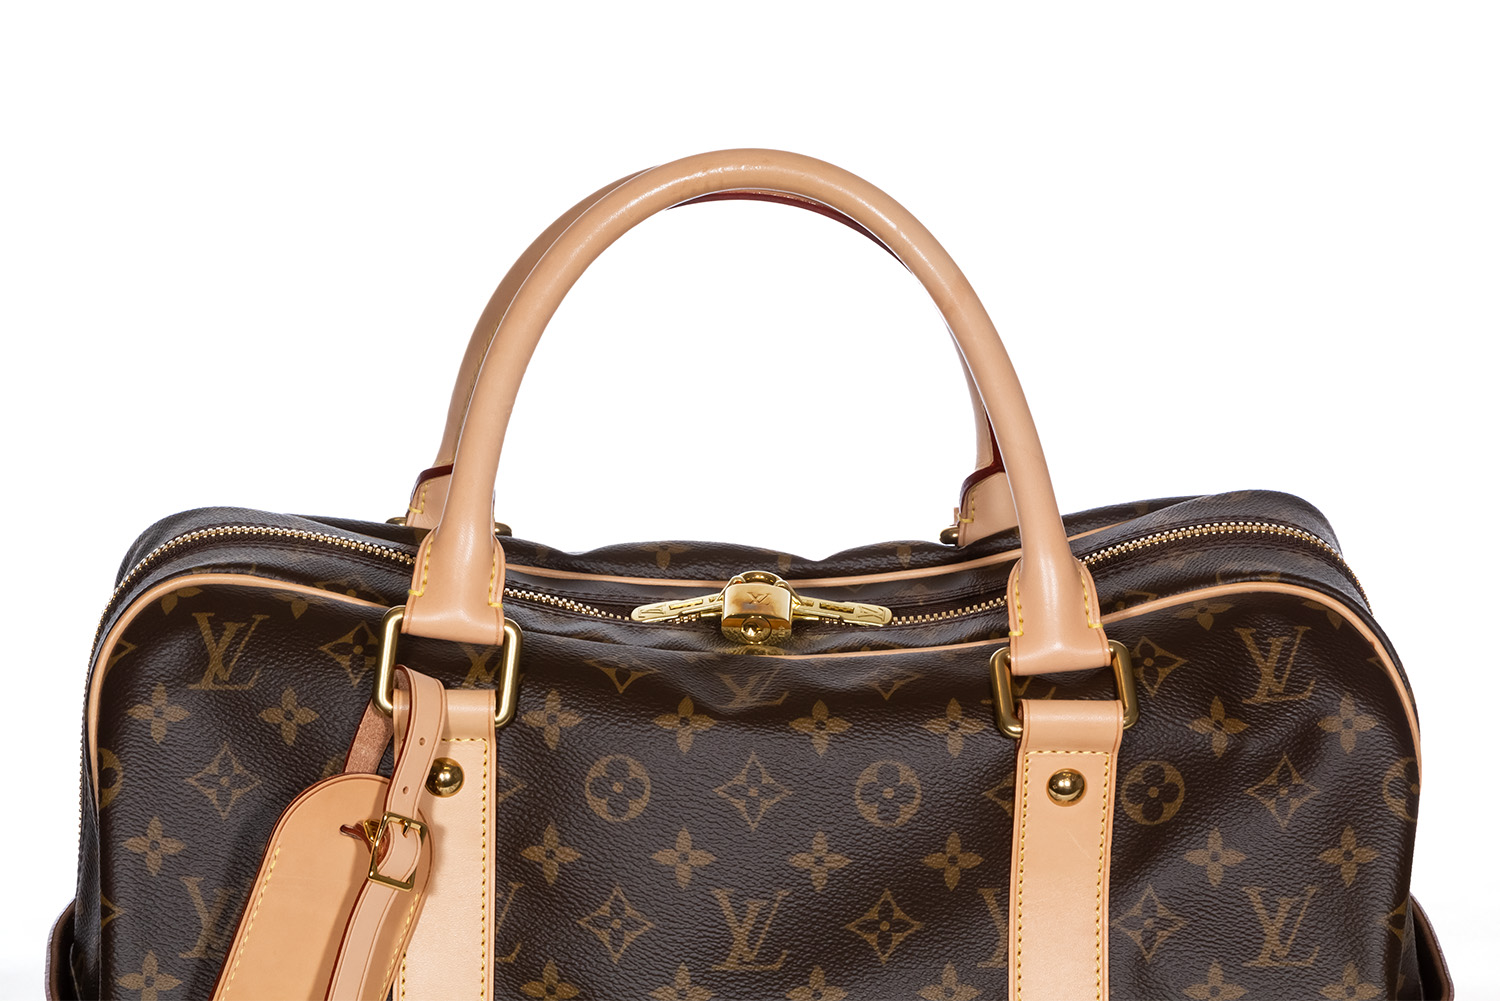 Louis Vuitton Carryall Duffle Bag in Monogram Vachette - SOLD